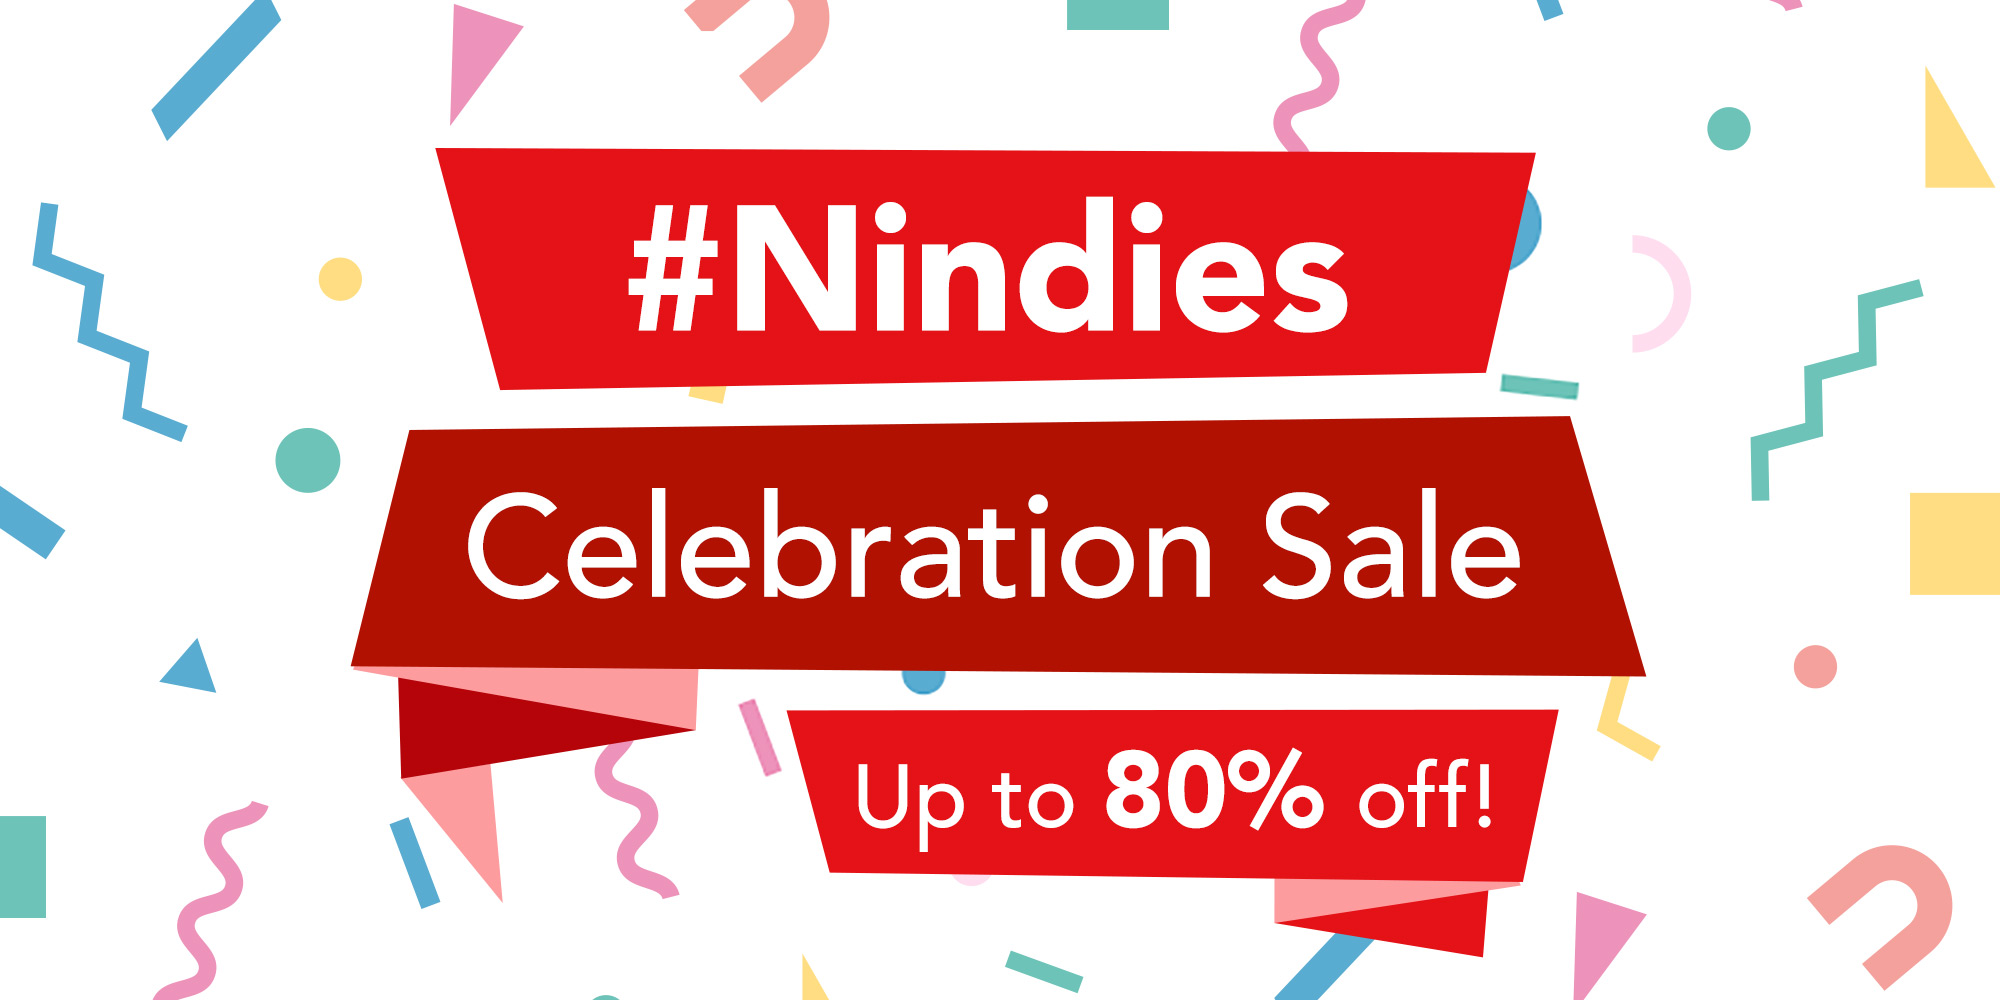 Nintendo eShop sale: #Nindies Celebration Sale